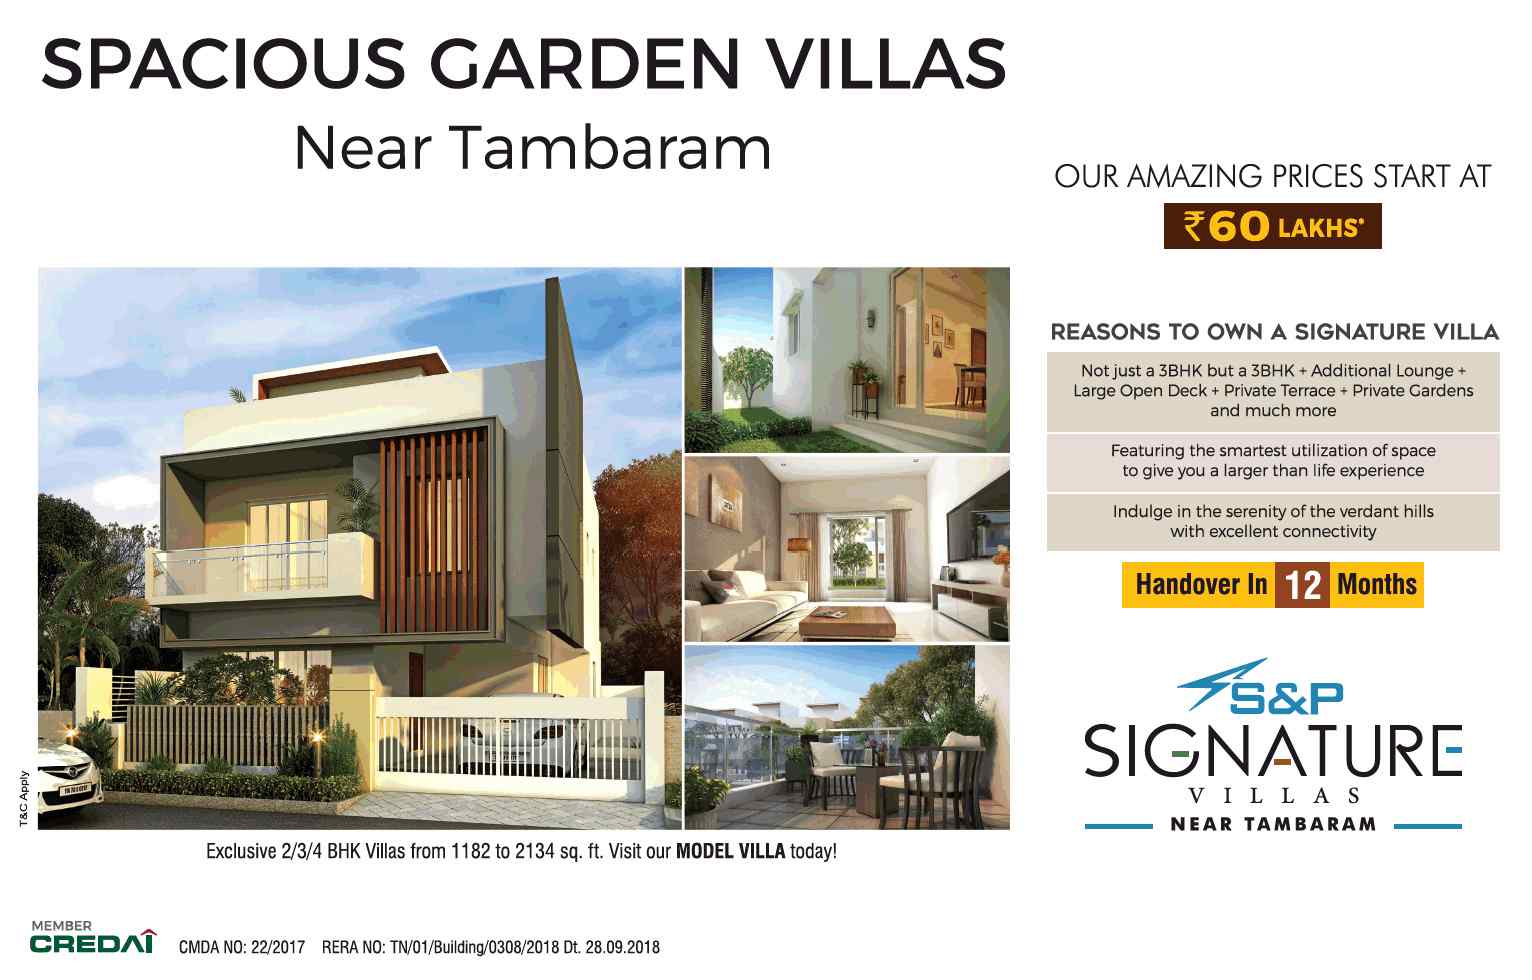 Book spacious garden villas @ Rs 60 Lakhs at S&P Signature Villas in Chennai